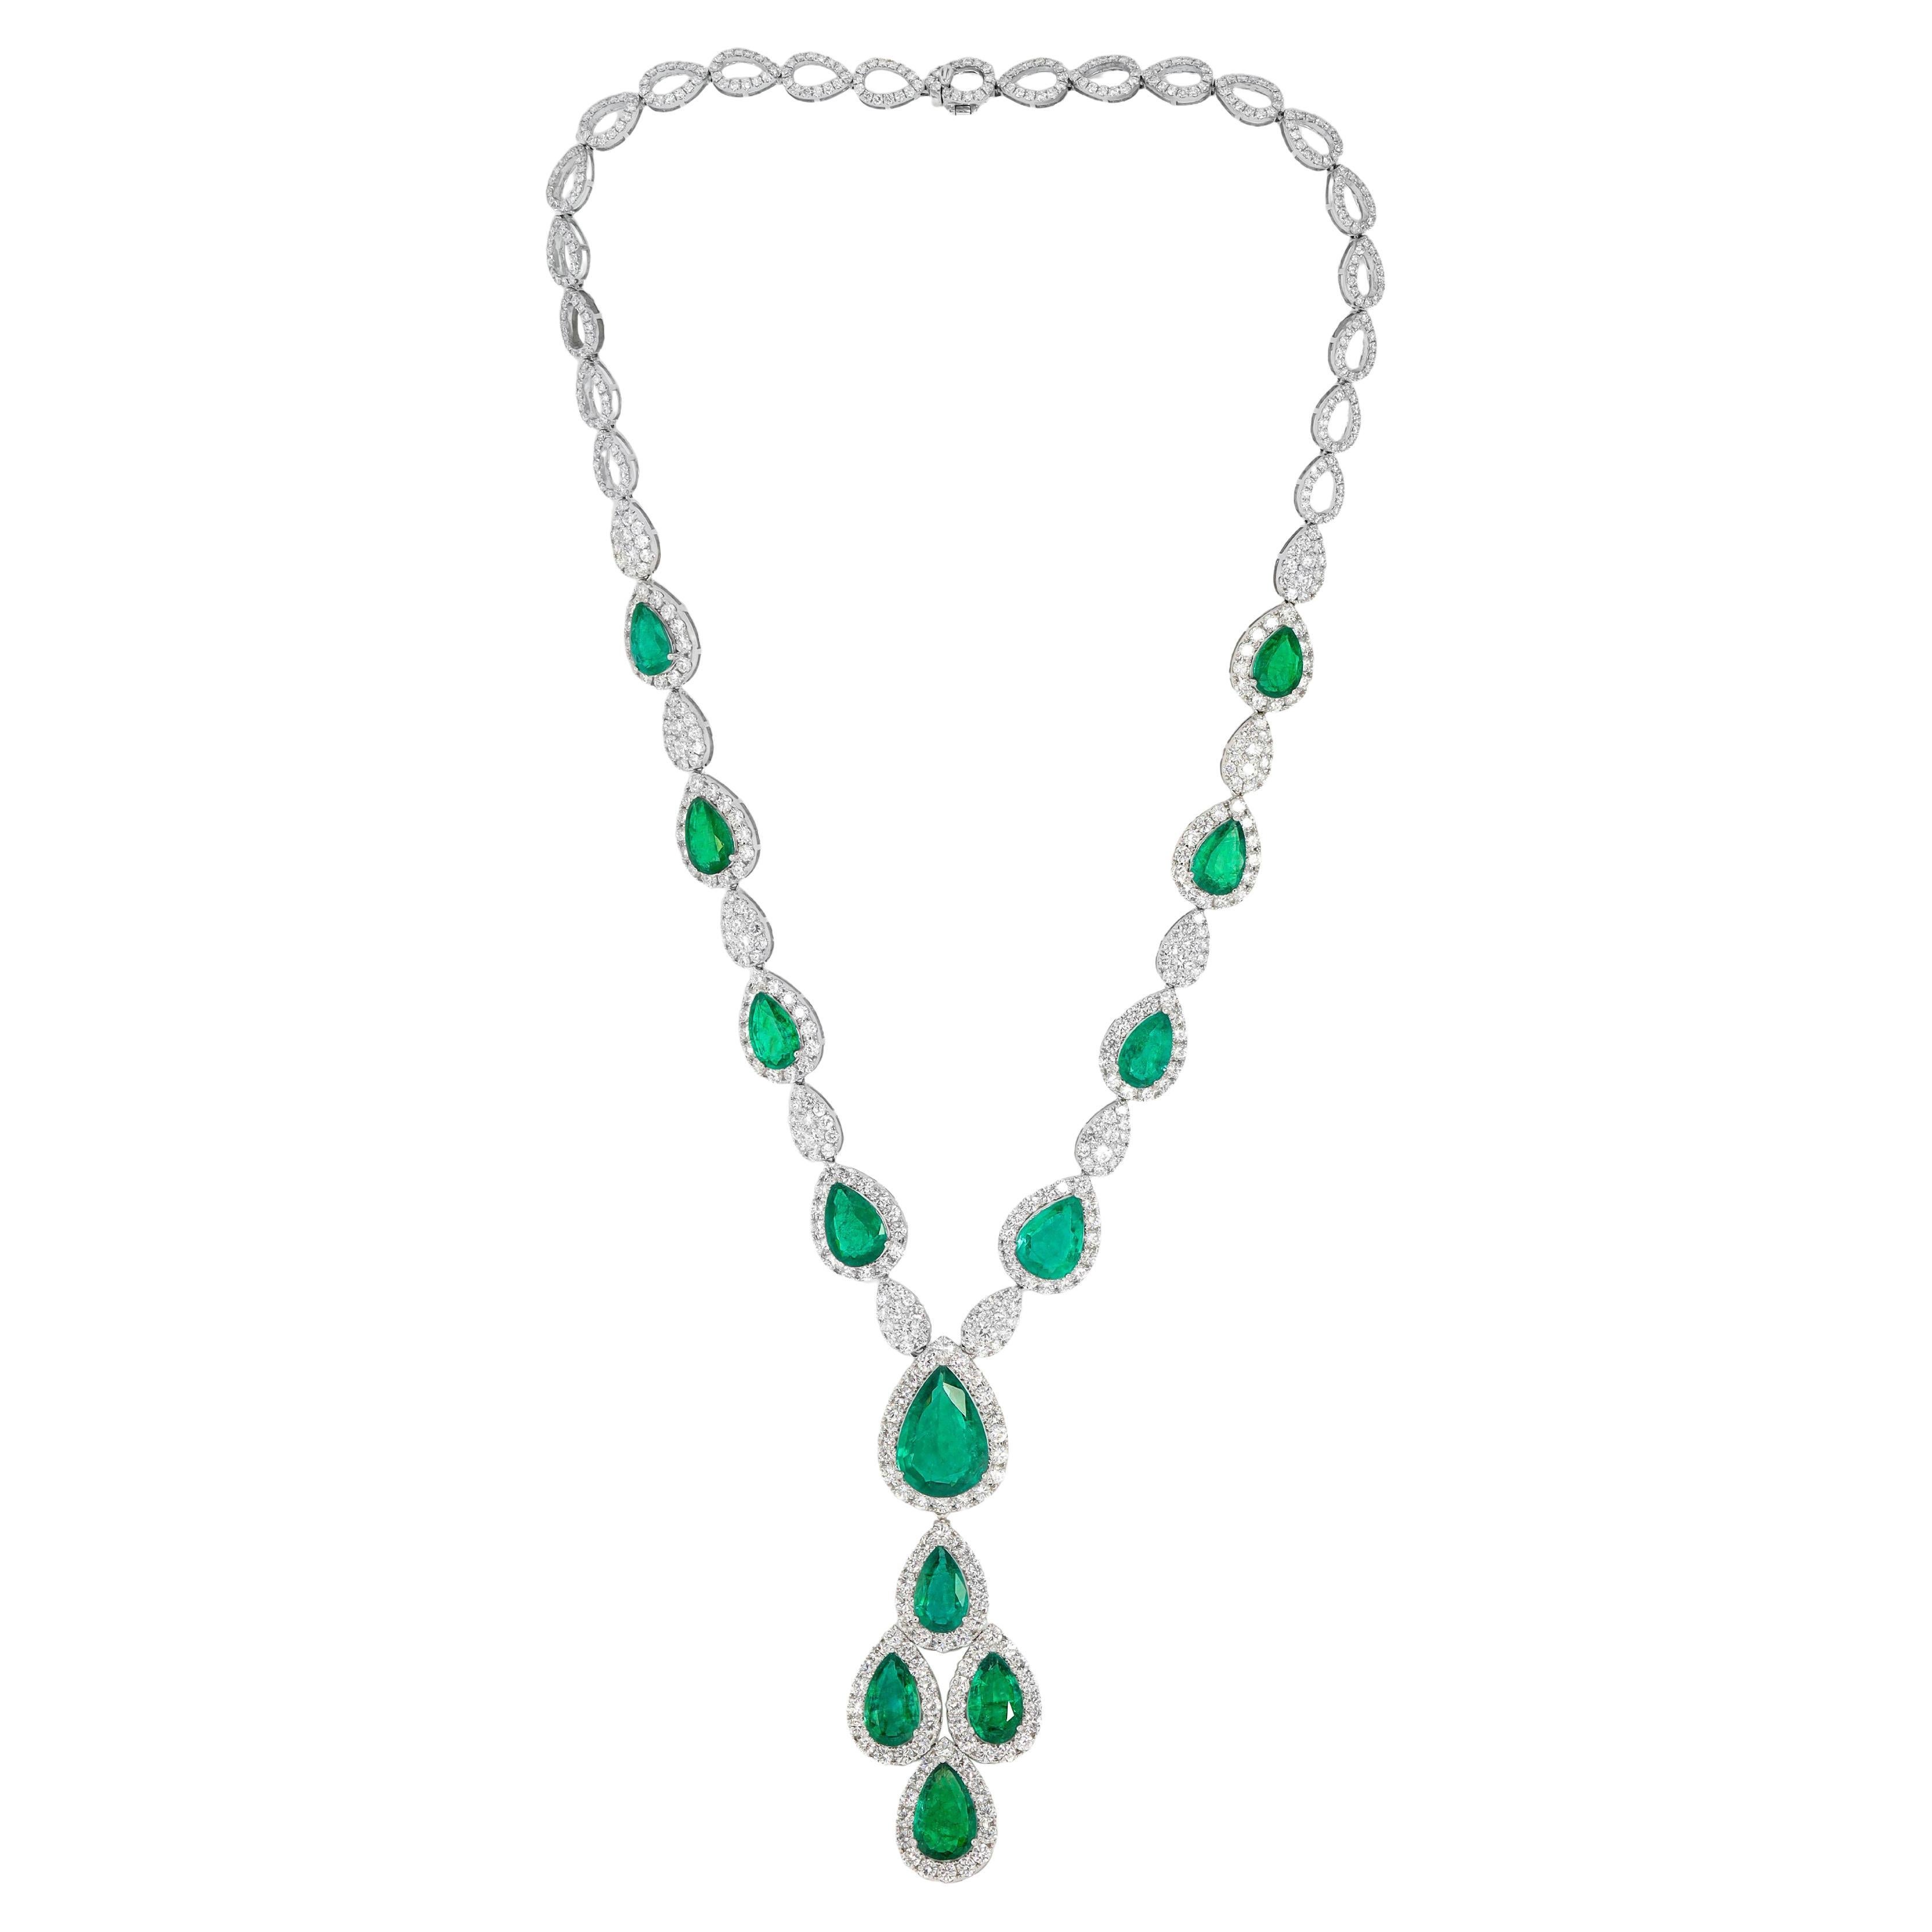 Diana M. Certified 32.19 Carat Emerald and Diamond Drop Necklace